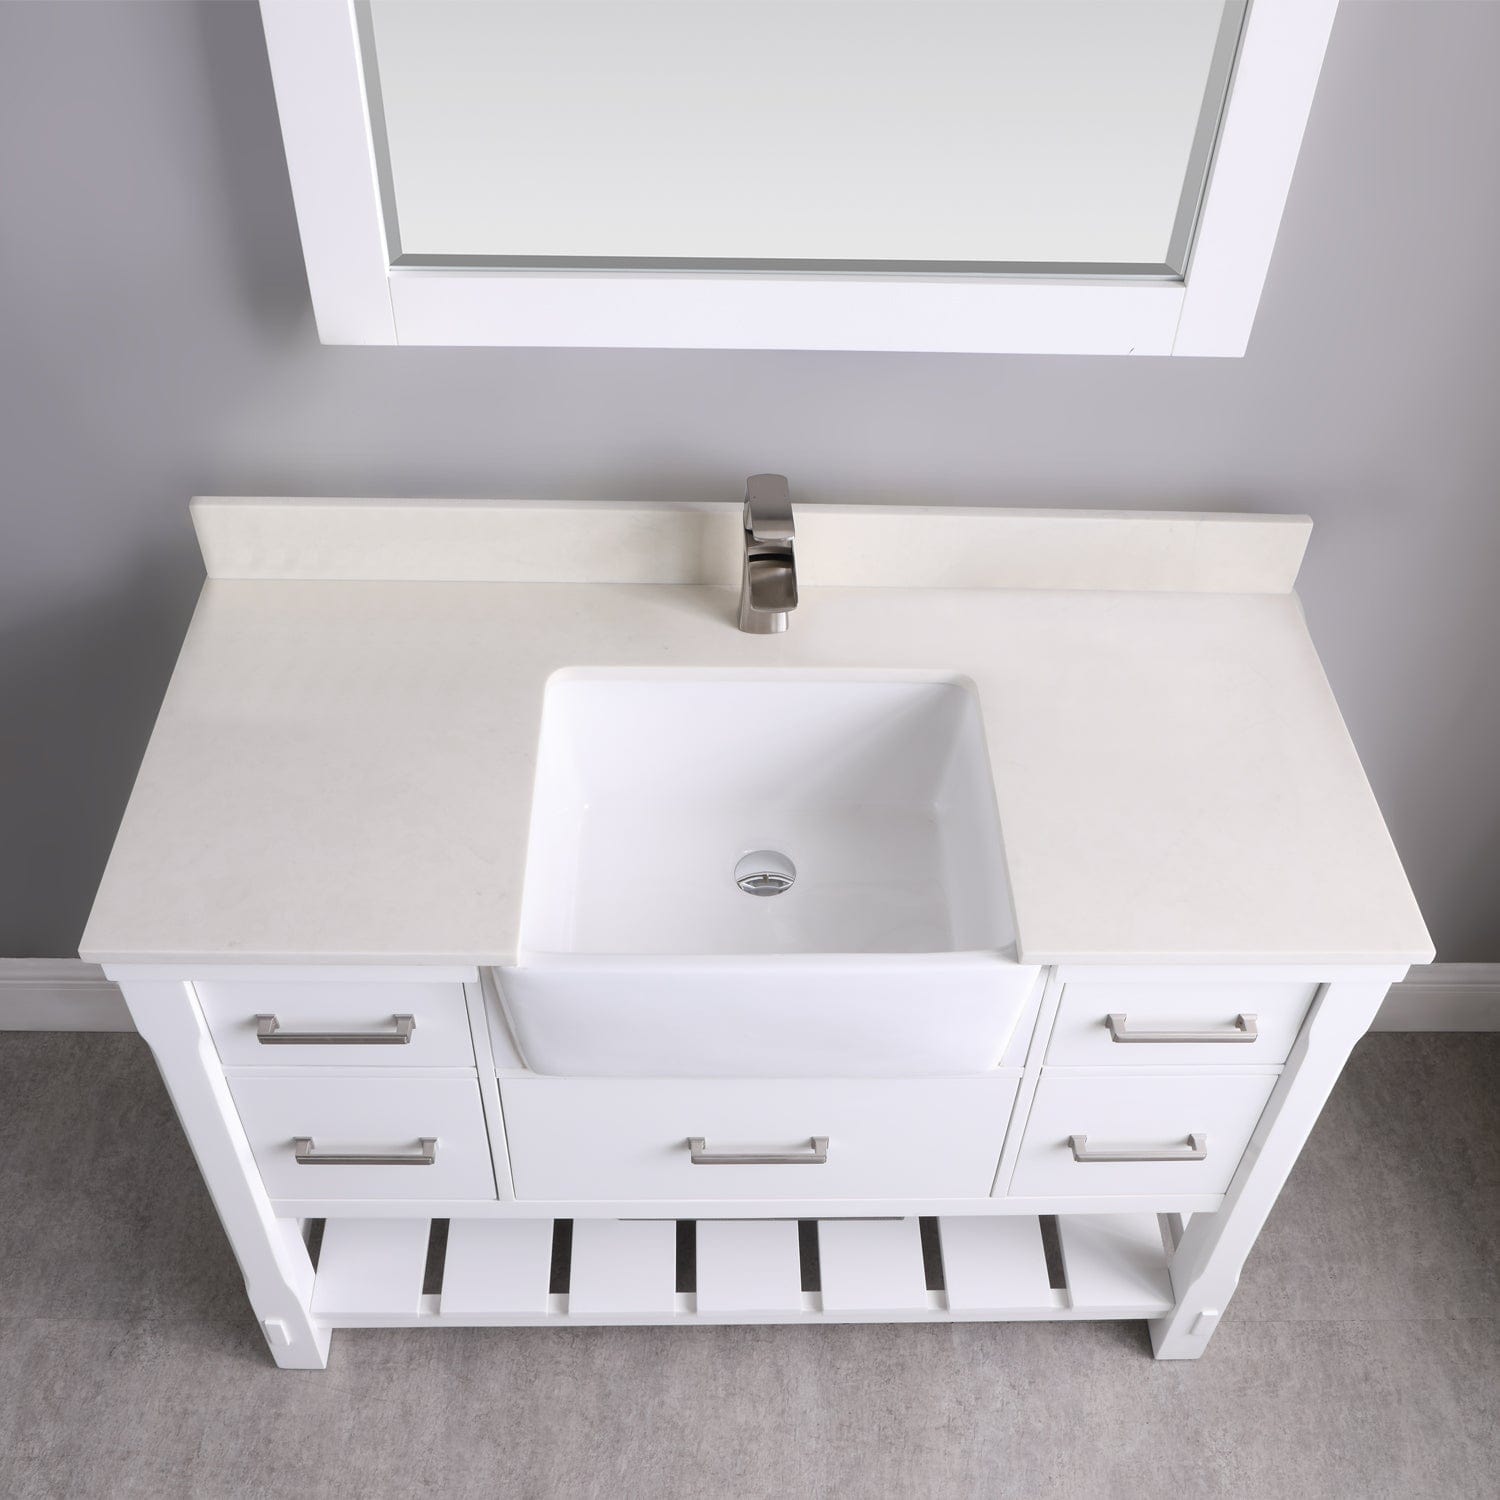 Altair Georgia 48" Single Bathroom Vanity Set in White and Composite Carrara White Stone Top with White Farmhouse Basin with Mirror 537048-WH-AW - Molaix631112970617Vanity537048-WH-AW